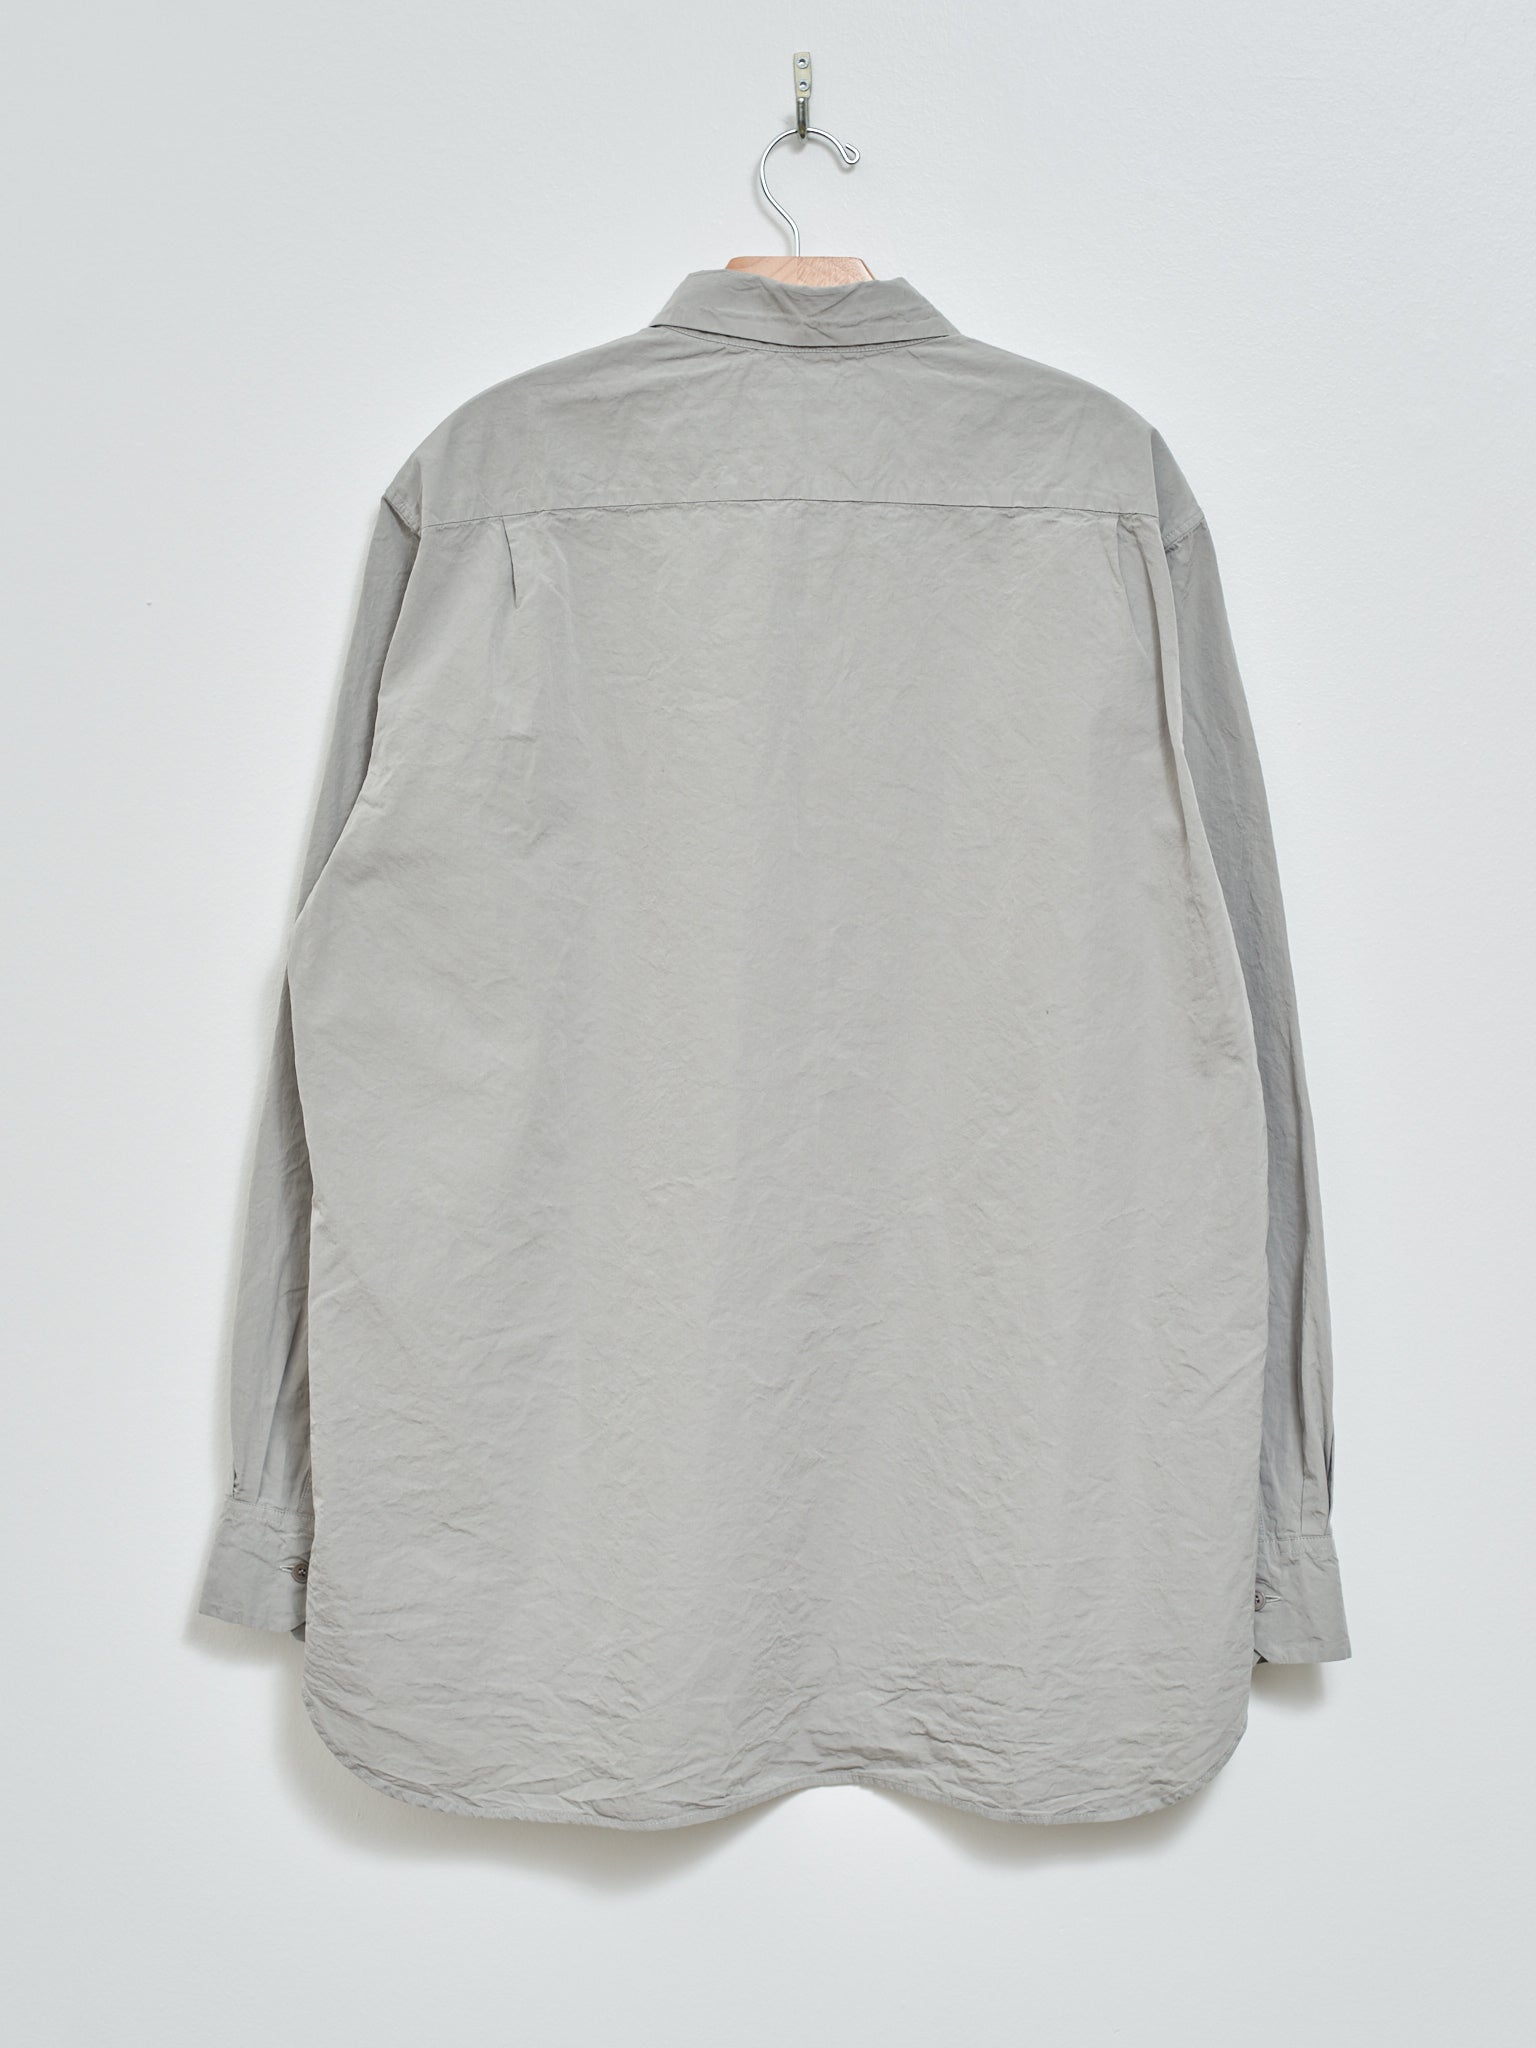 Namu Shop - Casey Casey Big Raccourcie Shirt - Light Gray